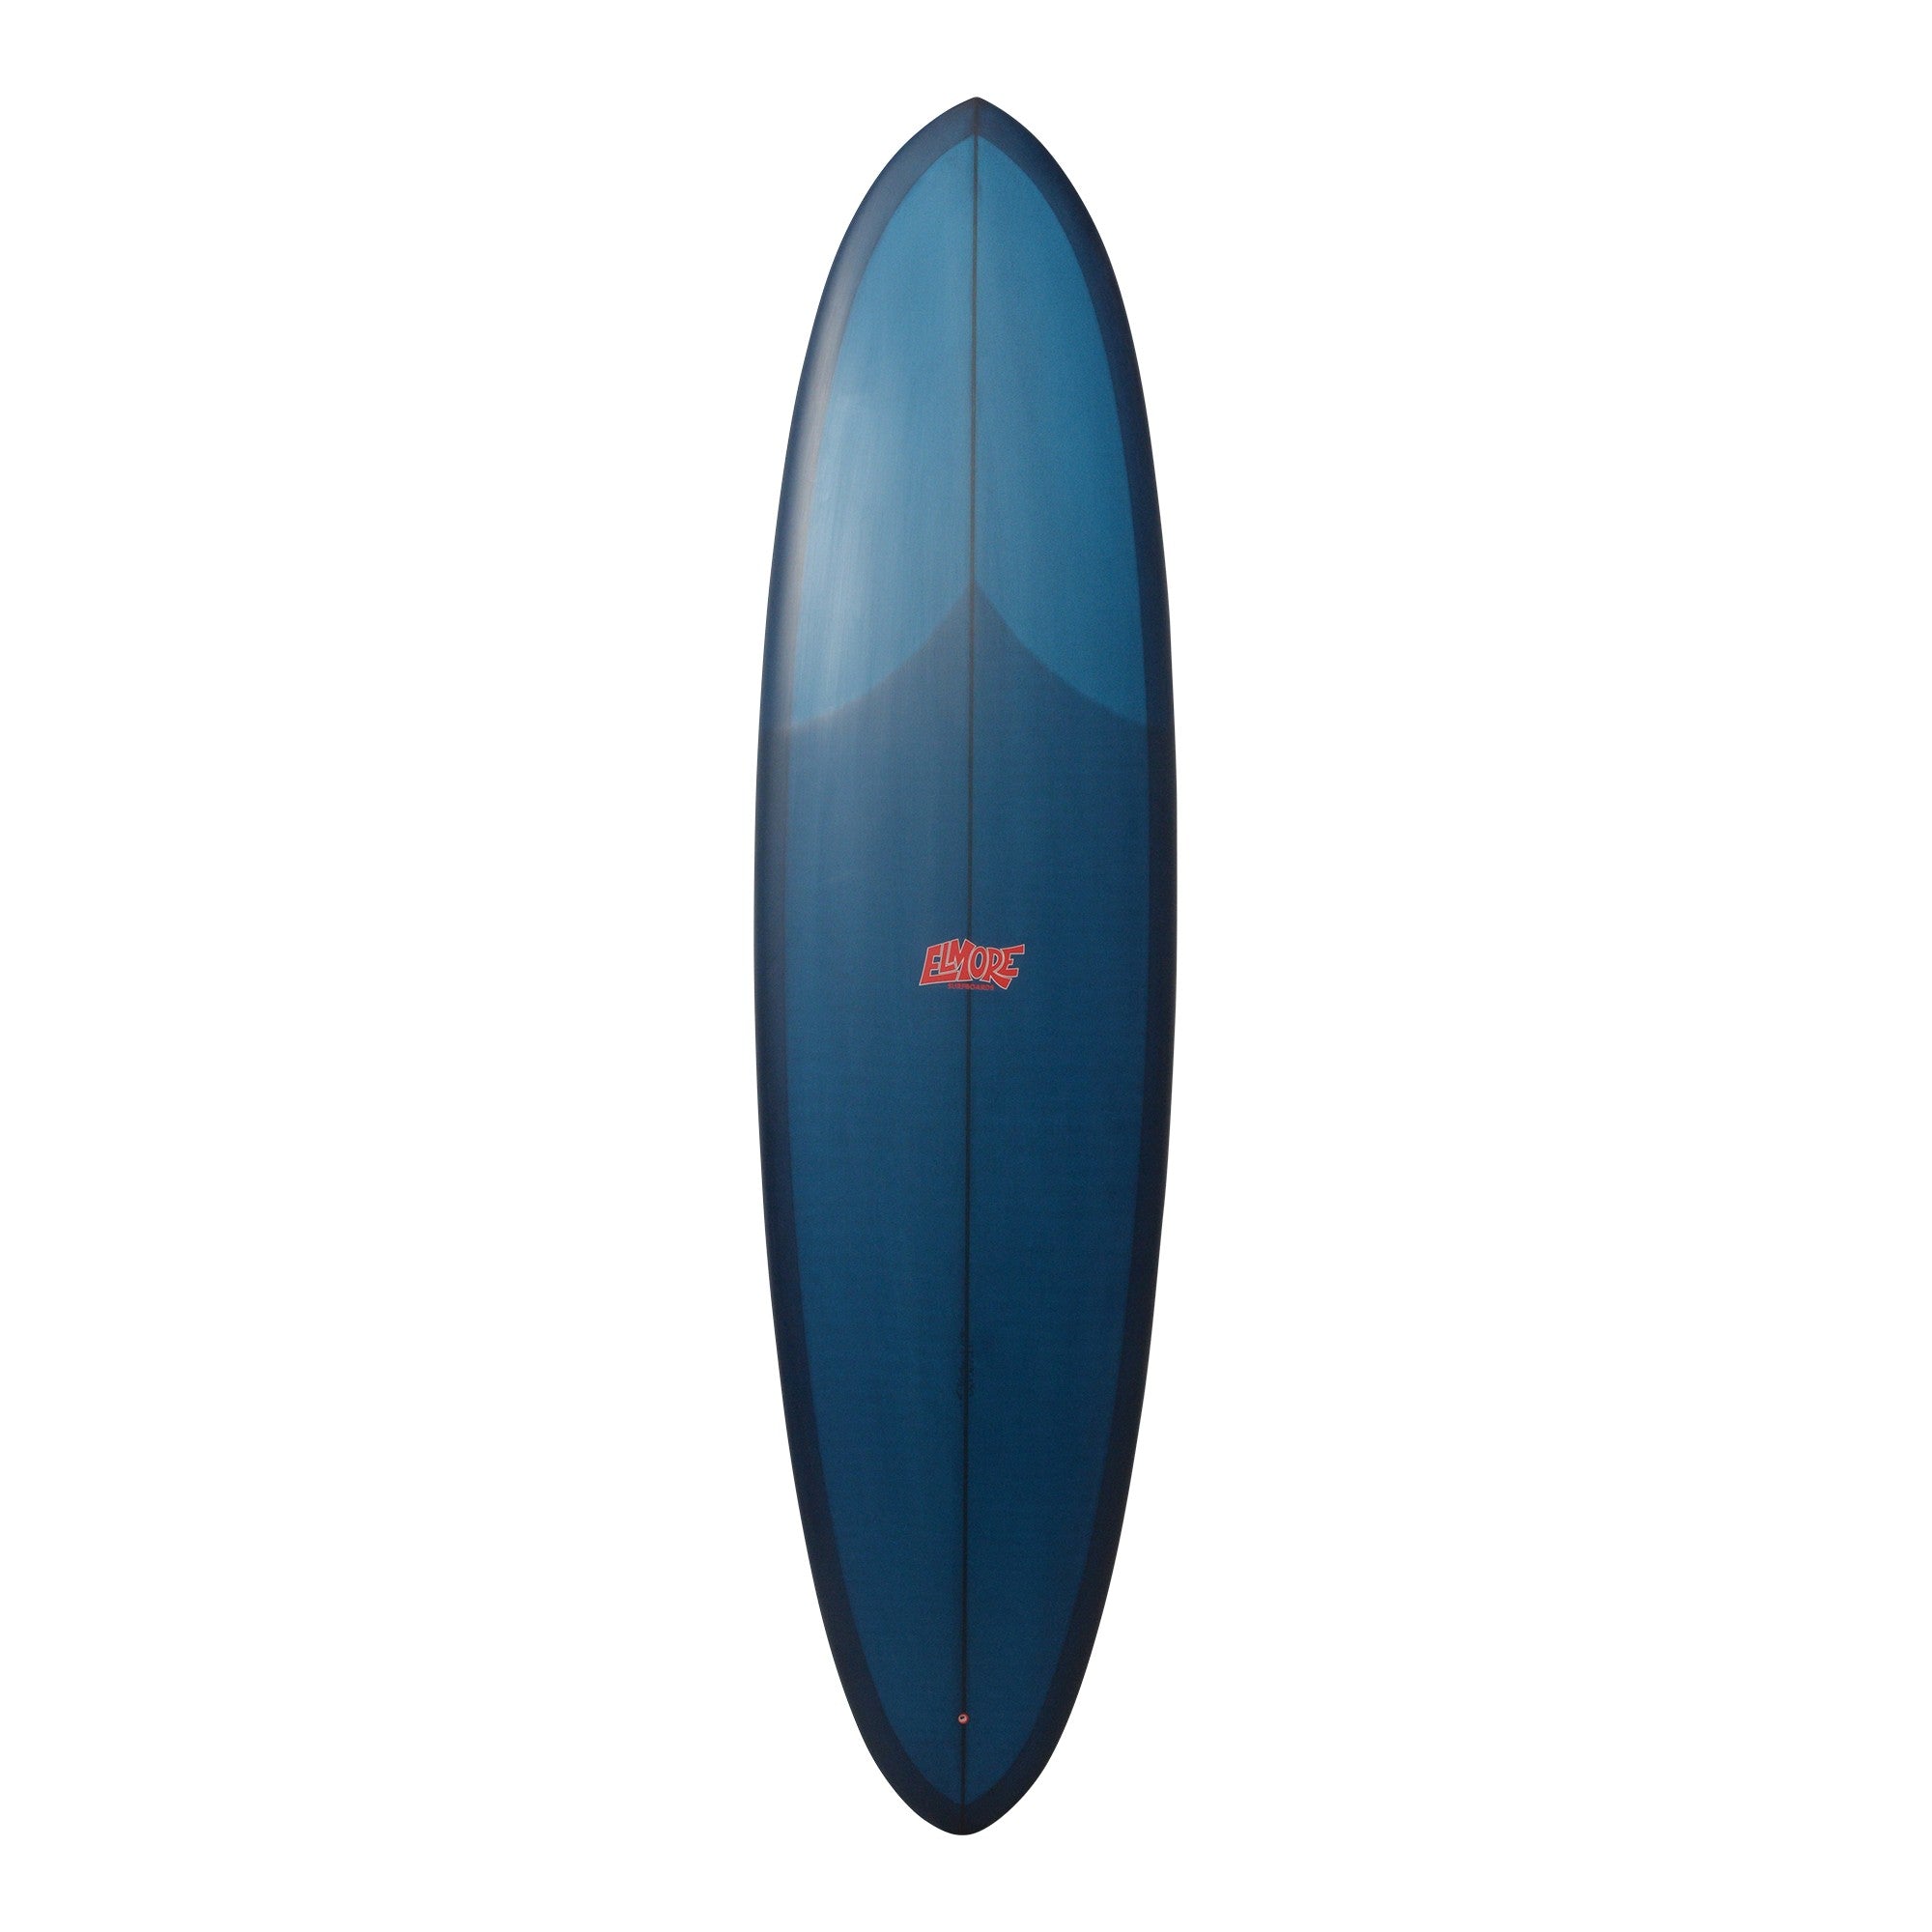 ELMORE Surfboards - Eggman 7'2 (PU) - Navy